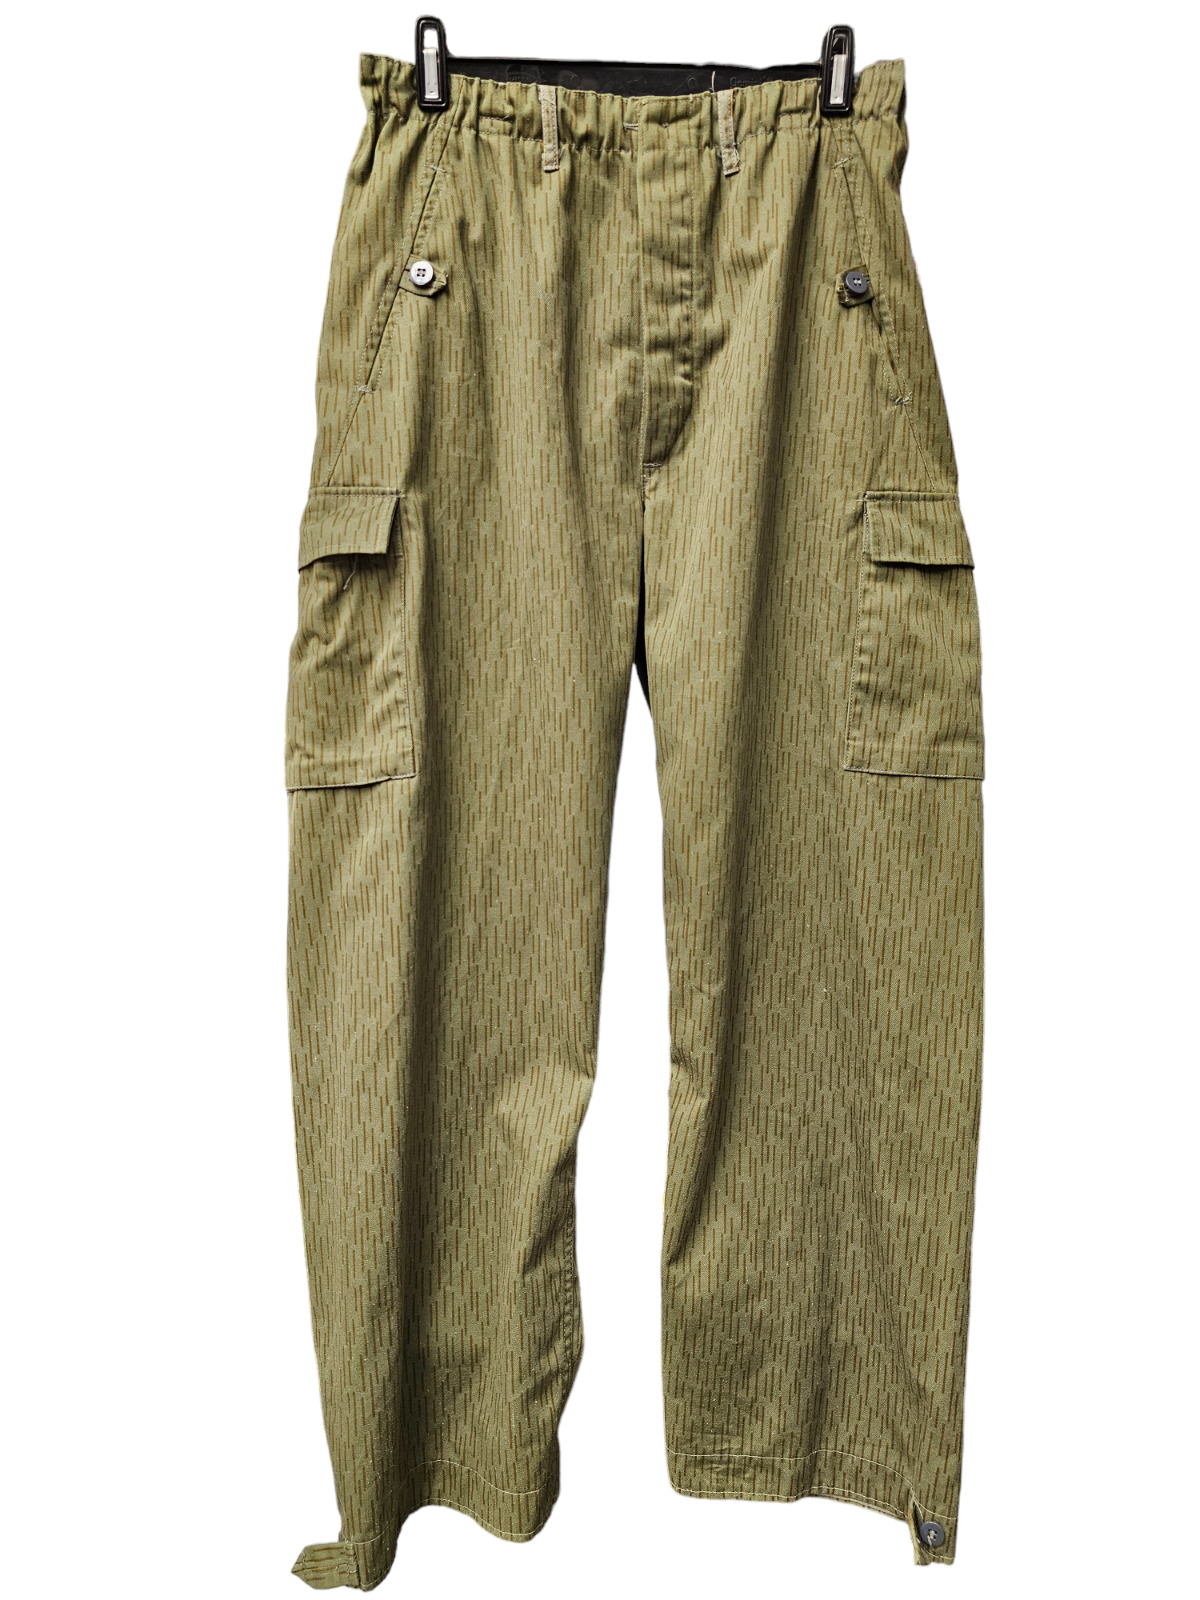 Vintage East German Raindrop Camouflage Pants